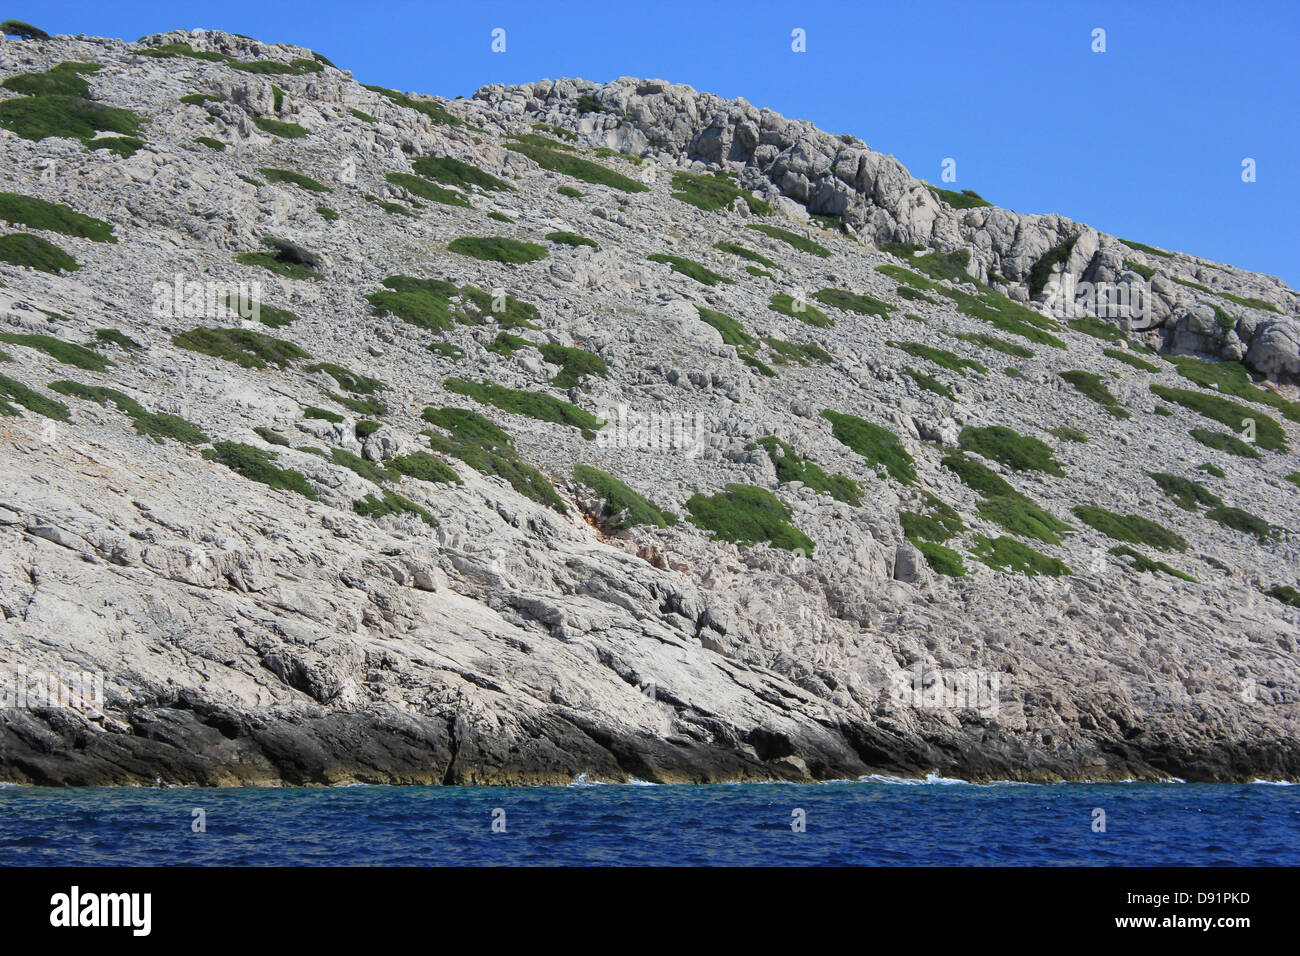 Wild mediterranean landscape - Kornati islands natural park, Adriatic sea, Croatia Stock Photo